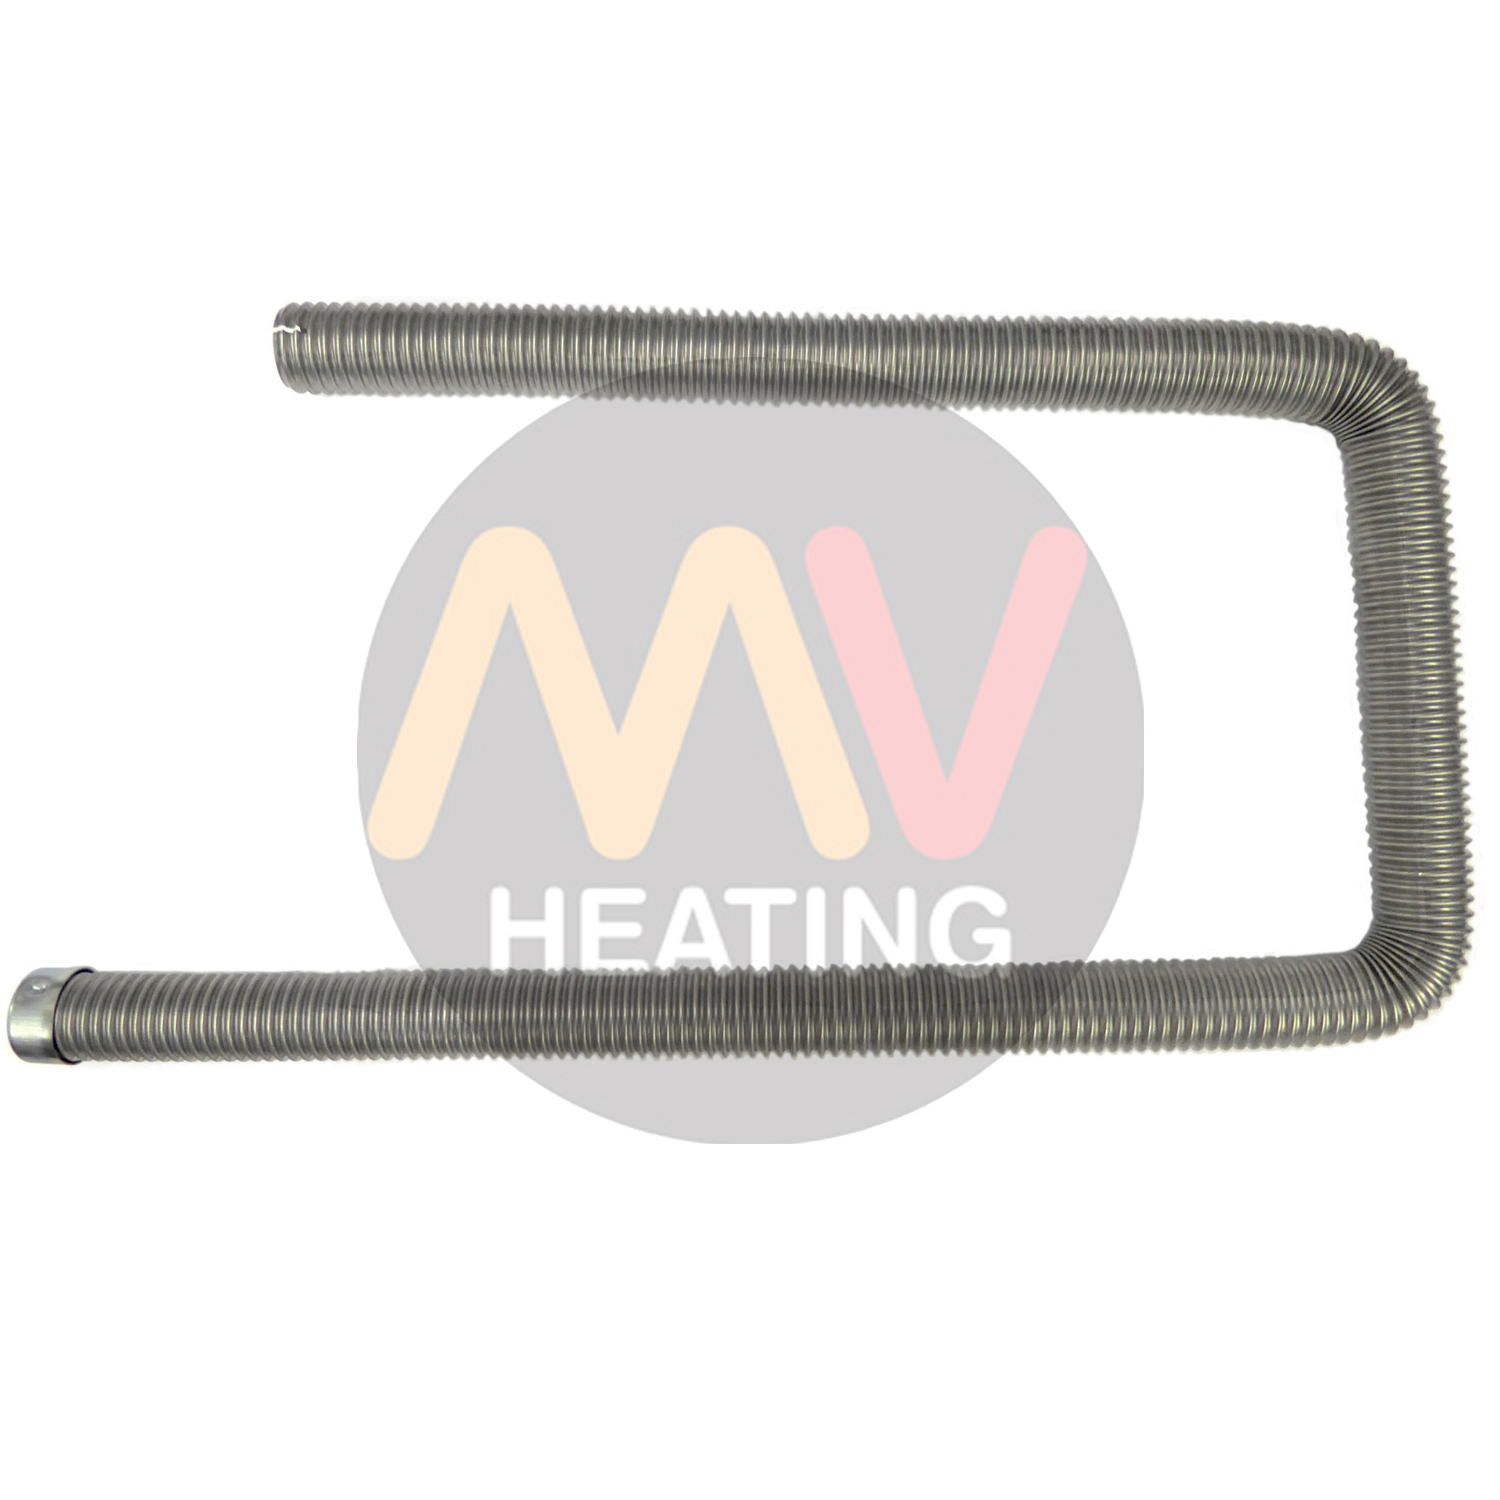 24mm Exhaust Pipe – MV Heating